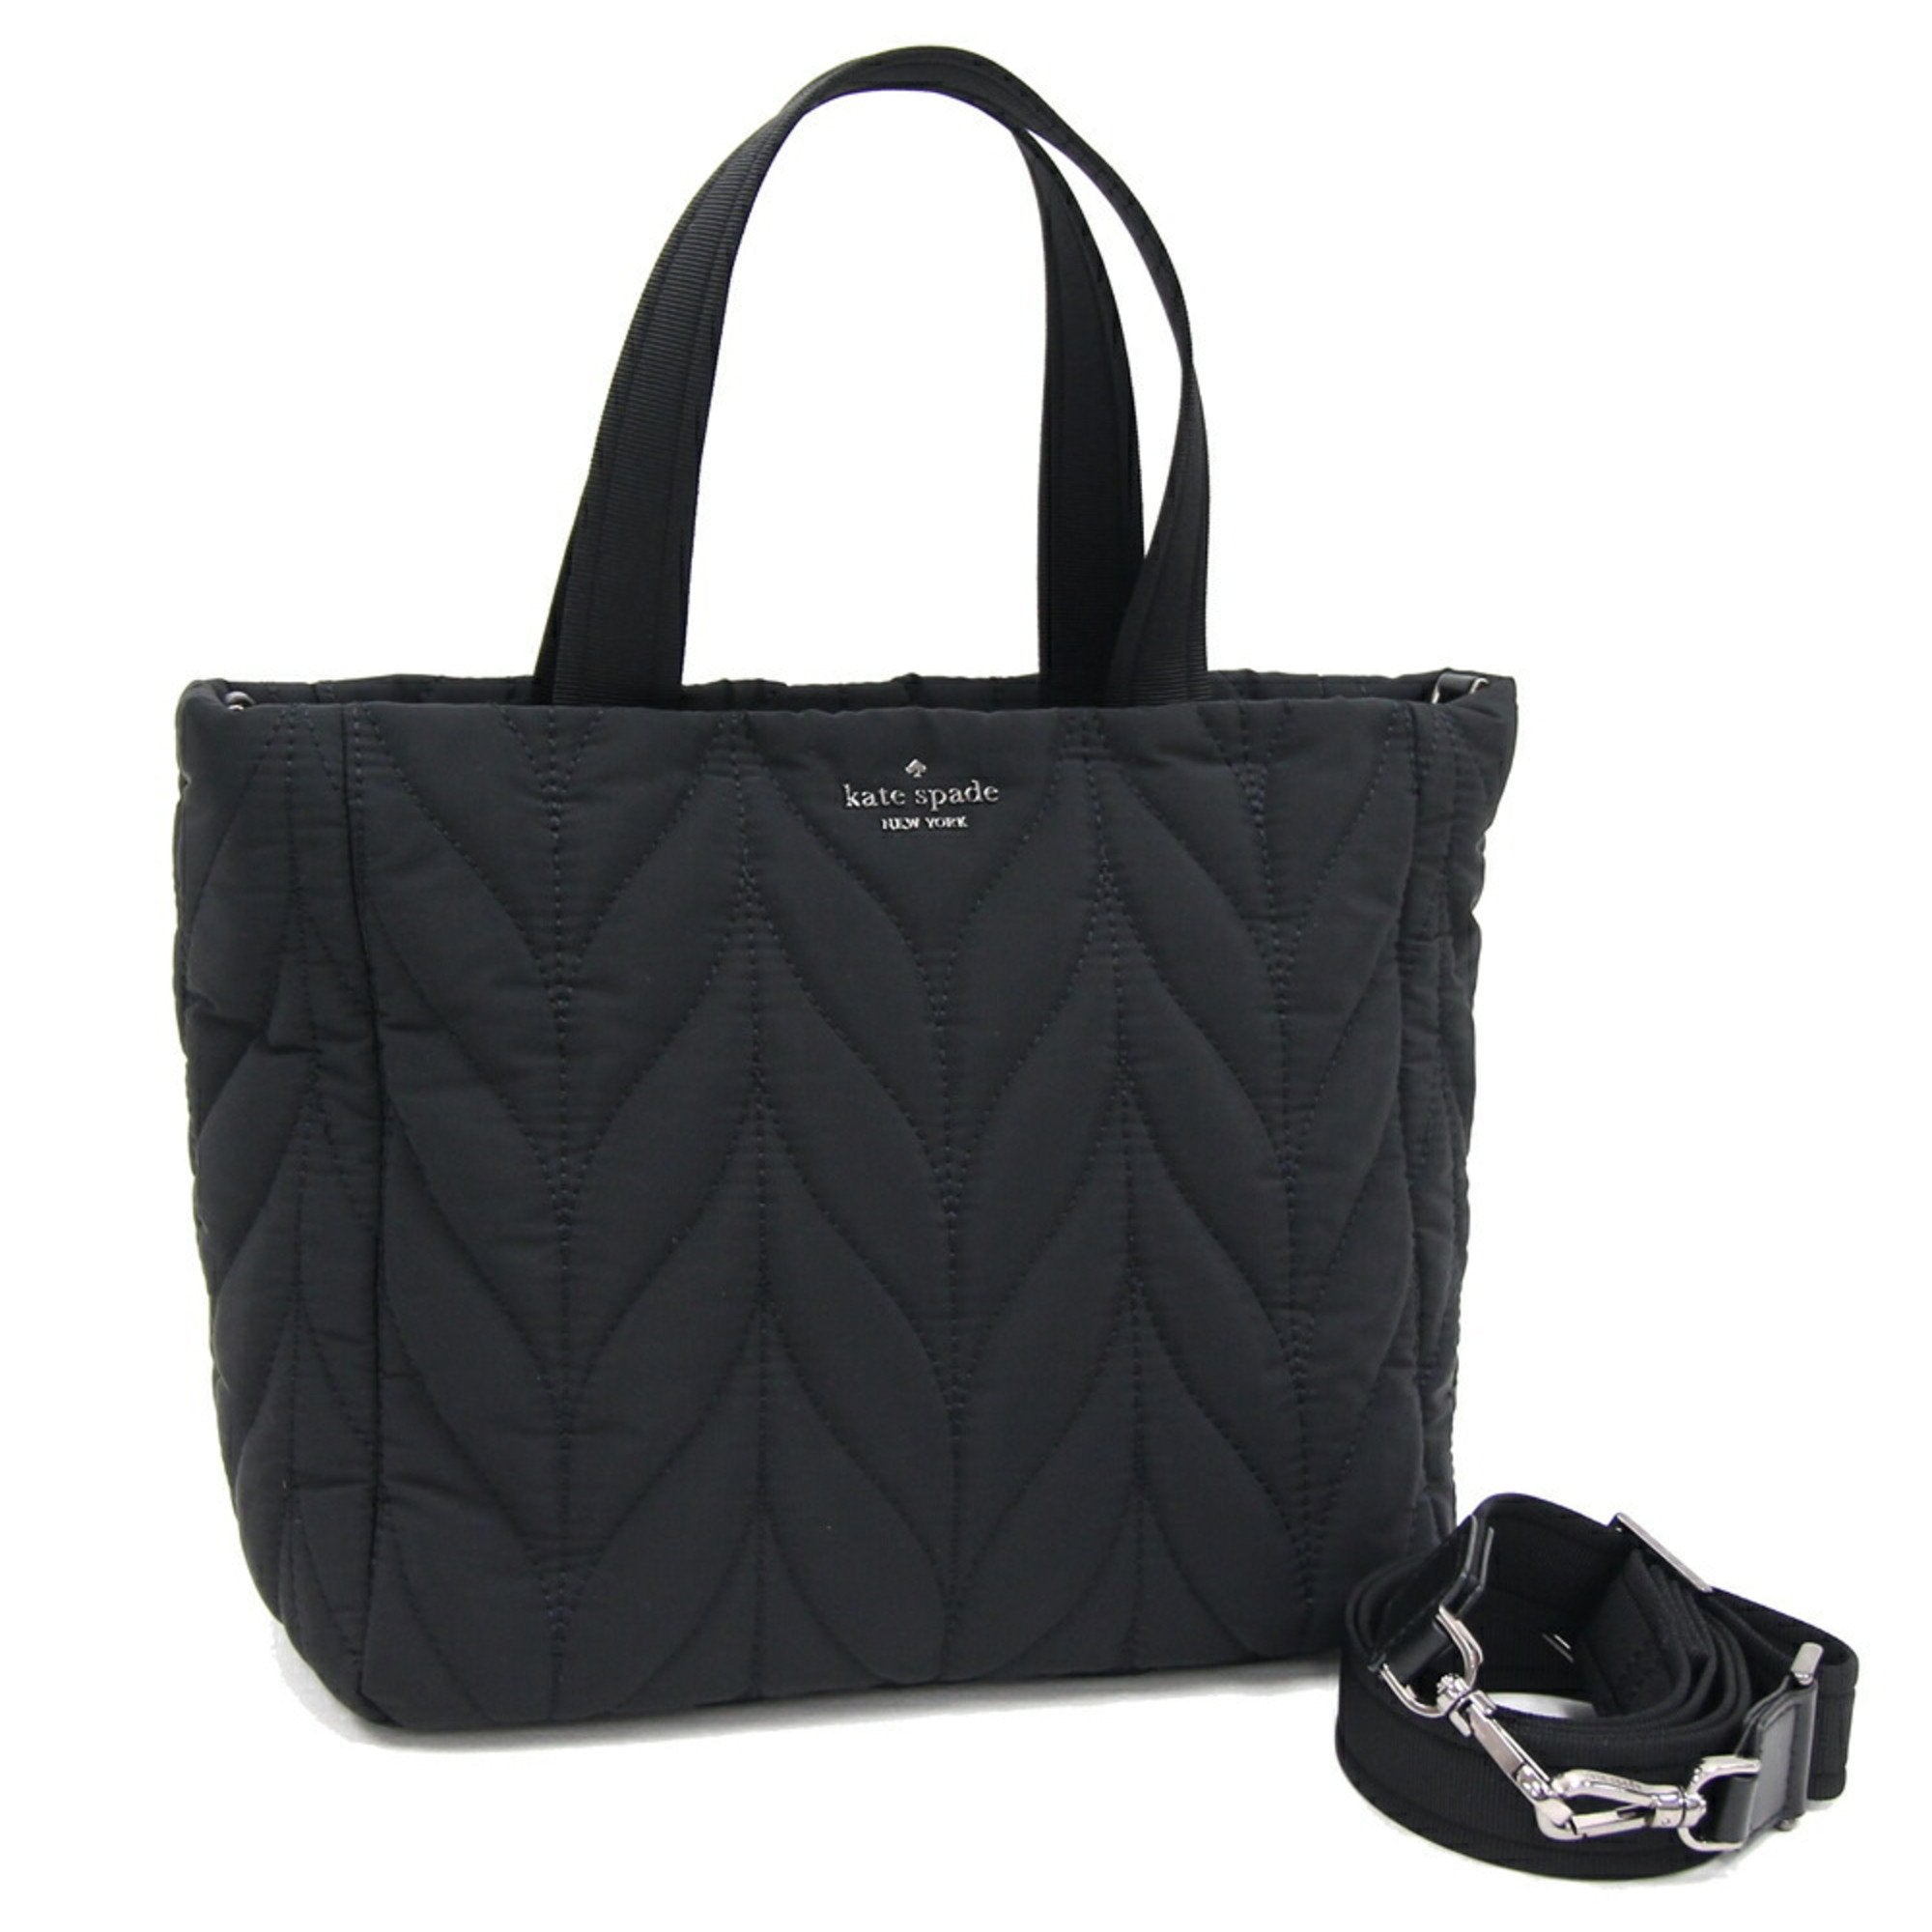 Handbag Ellie Briar Lane WKRU5824 Black Nylon Quilted Women's